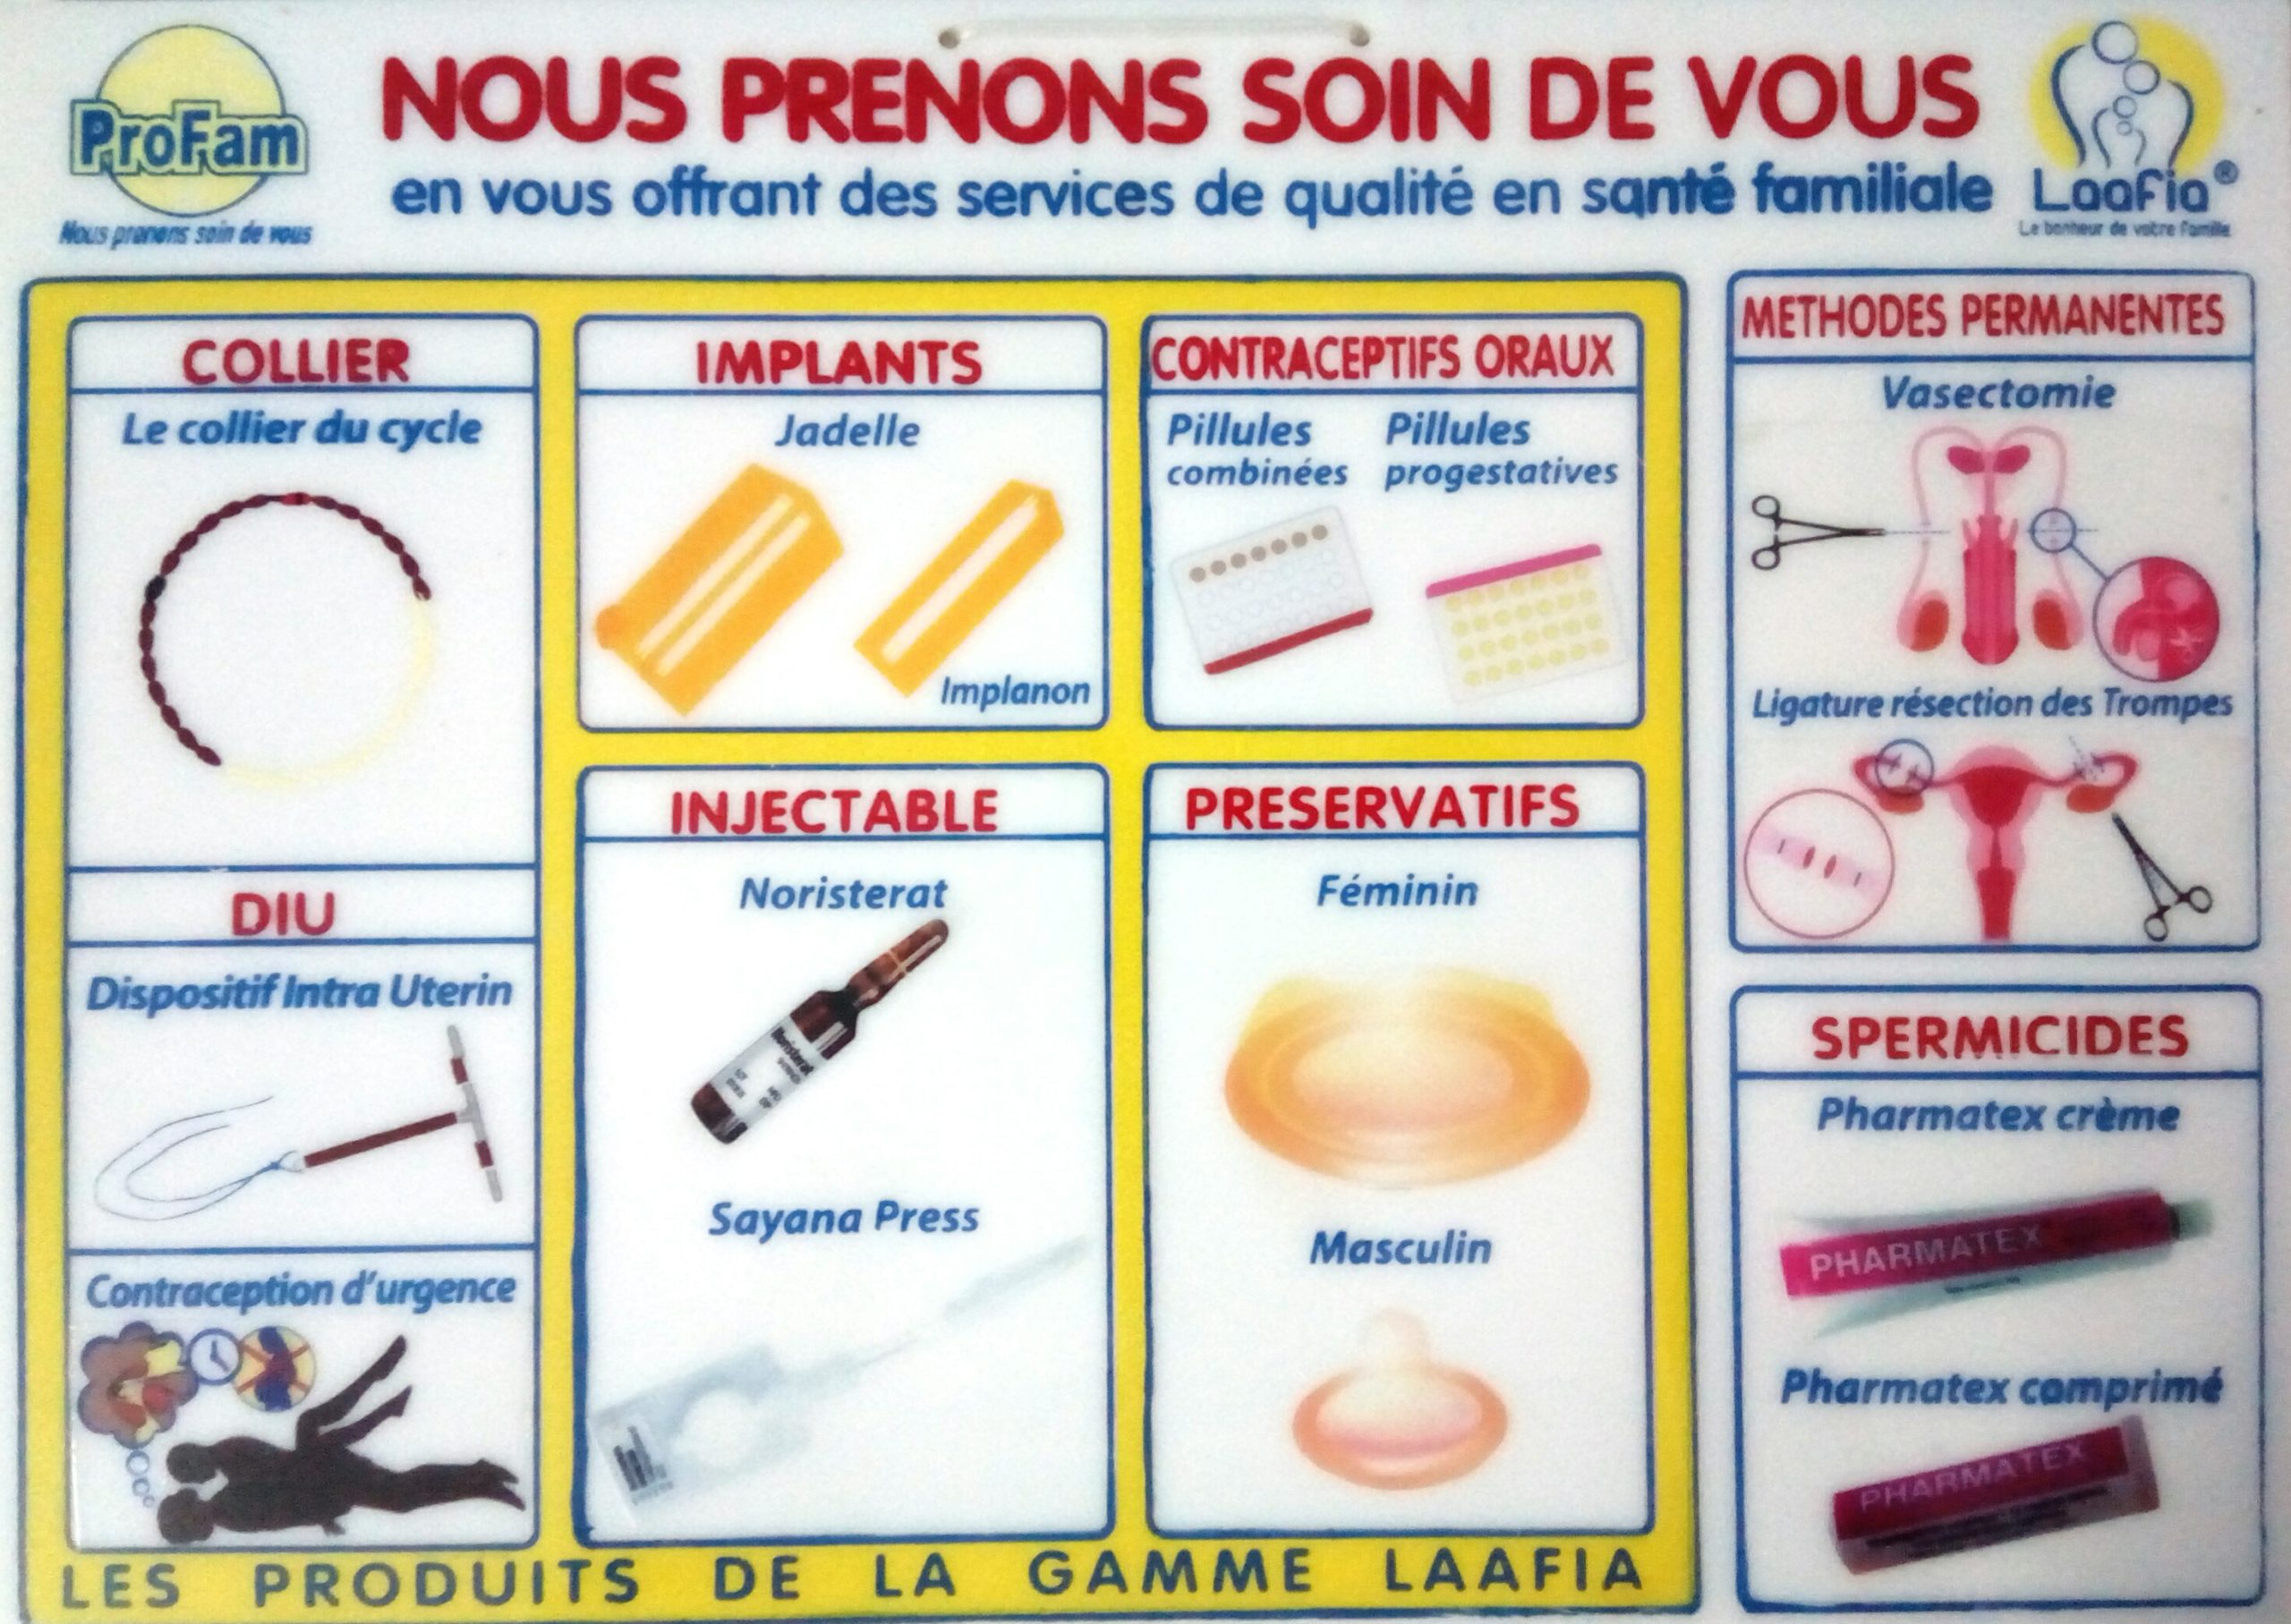 Produits de contraception de la gamme Lafia